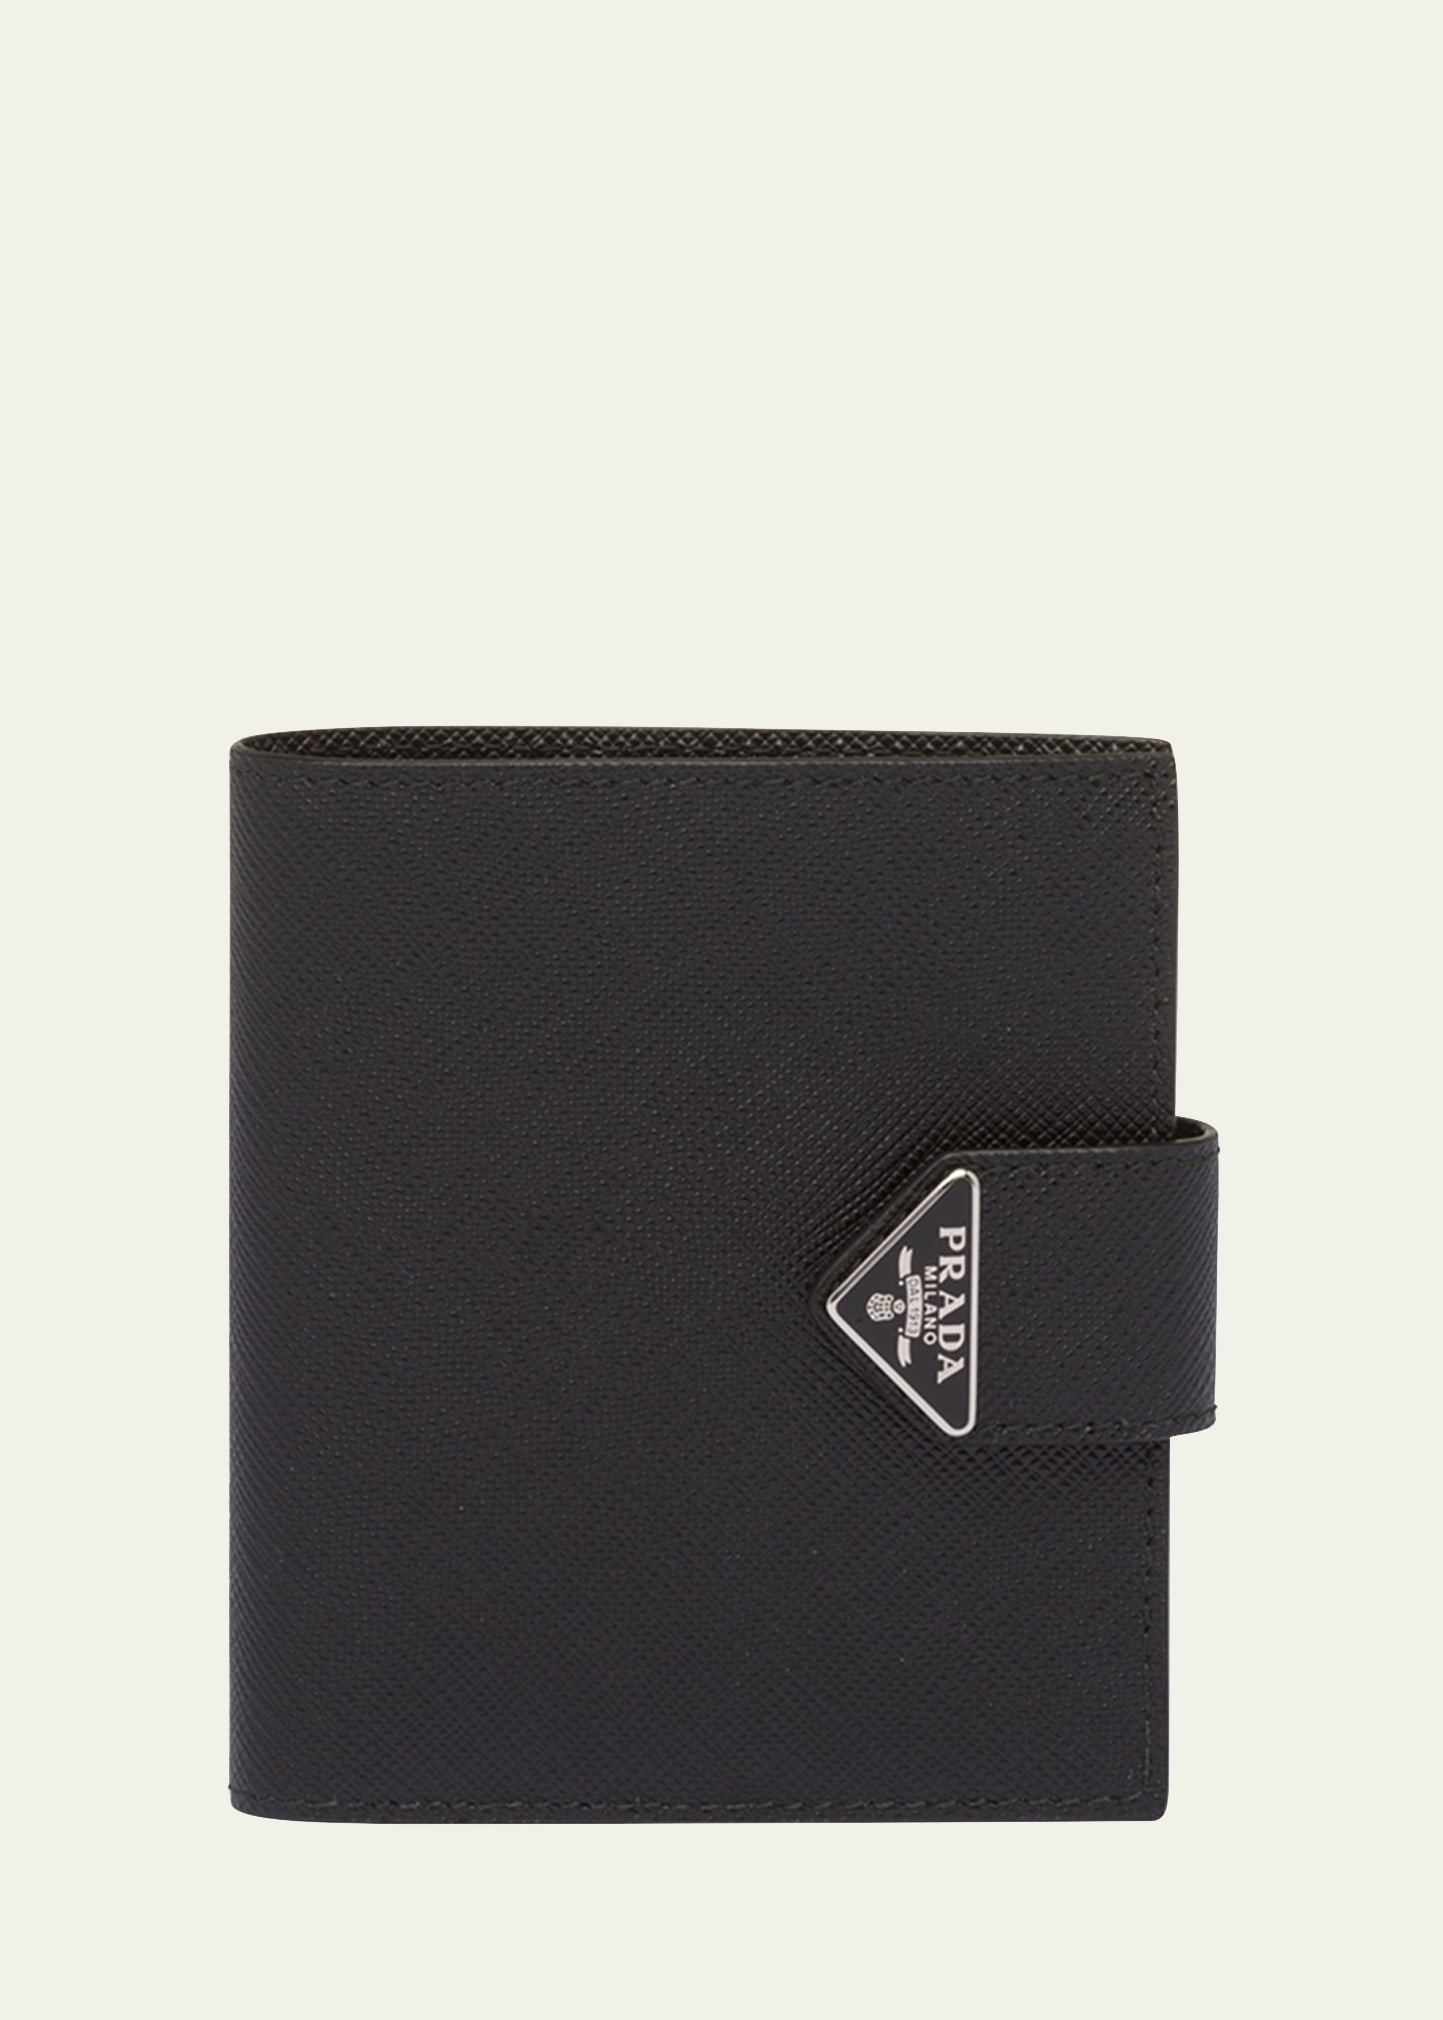 Prada Men's Leather Wallet